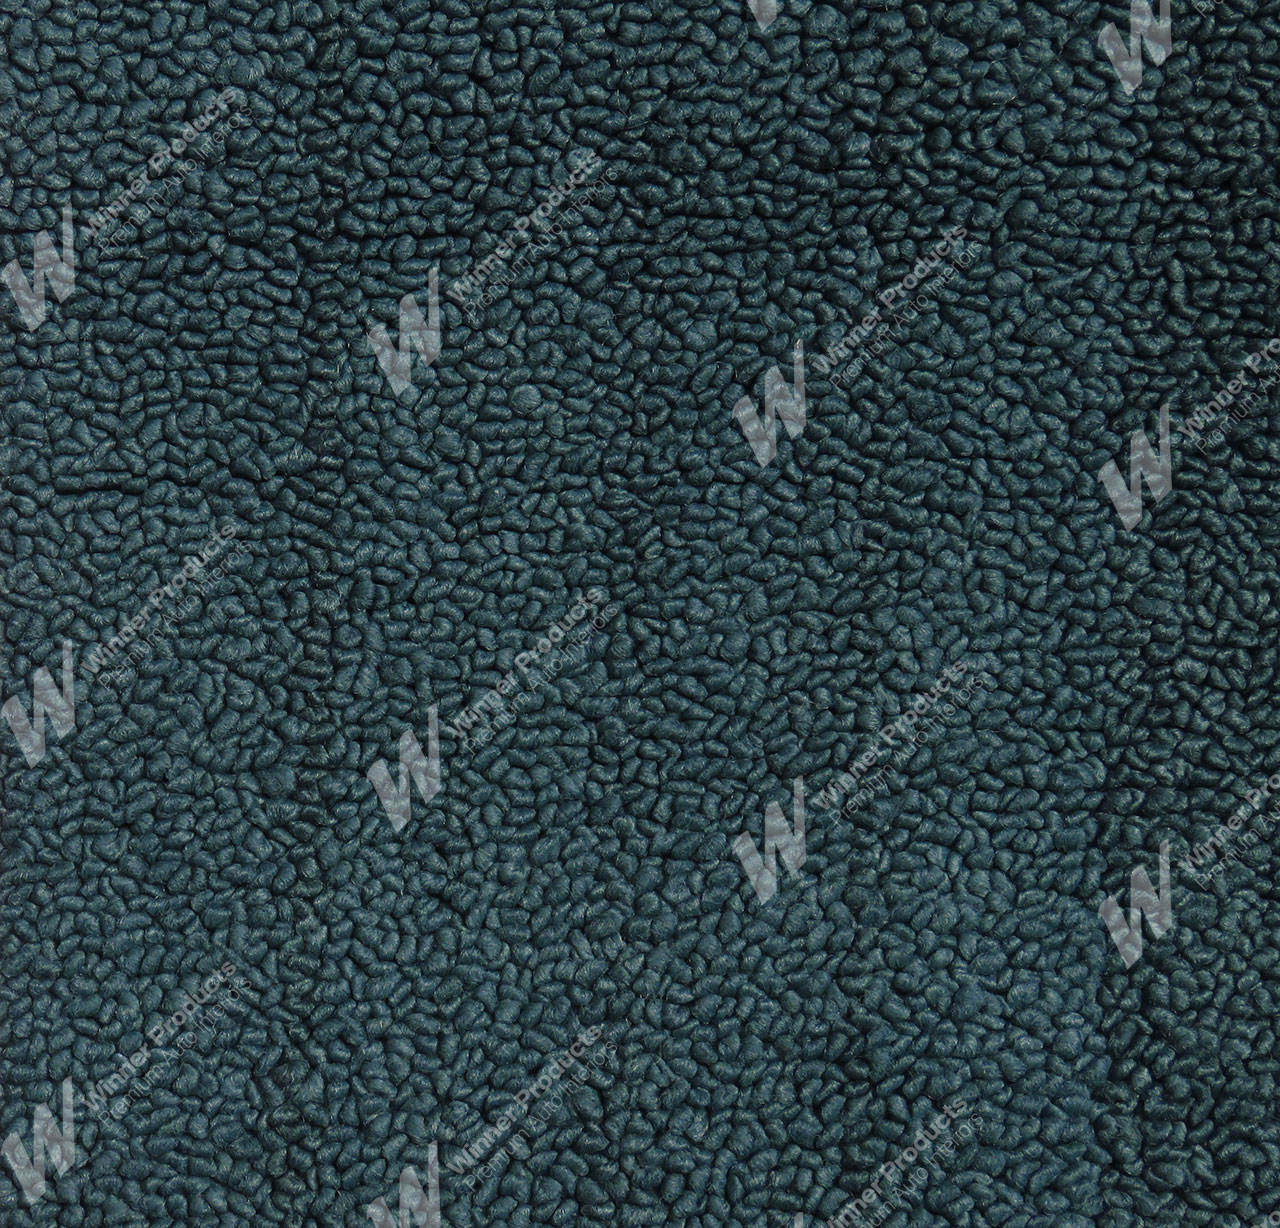 Holden Torana LC Torana S Coupe 43D Turquoise Mist Carpet (Image 1 of 1)